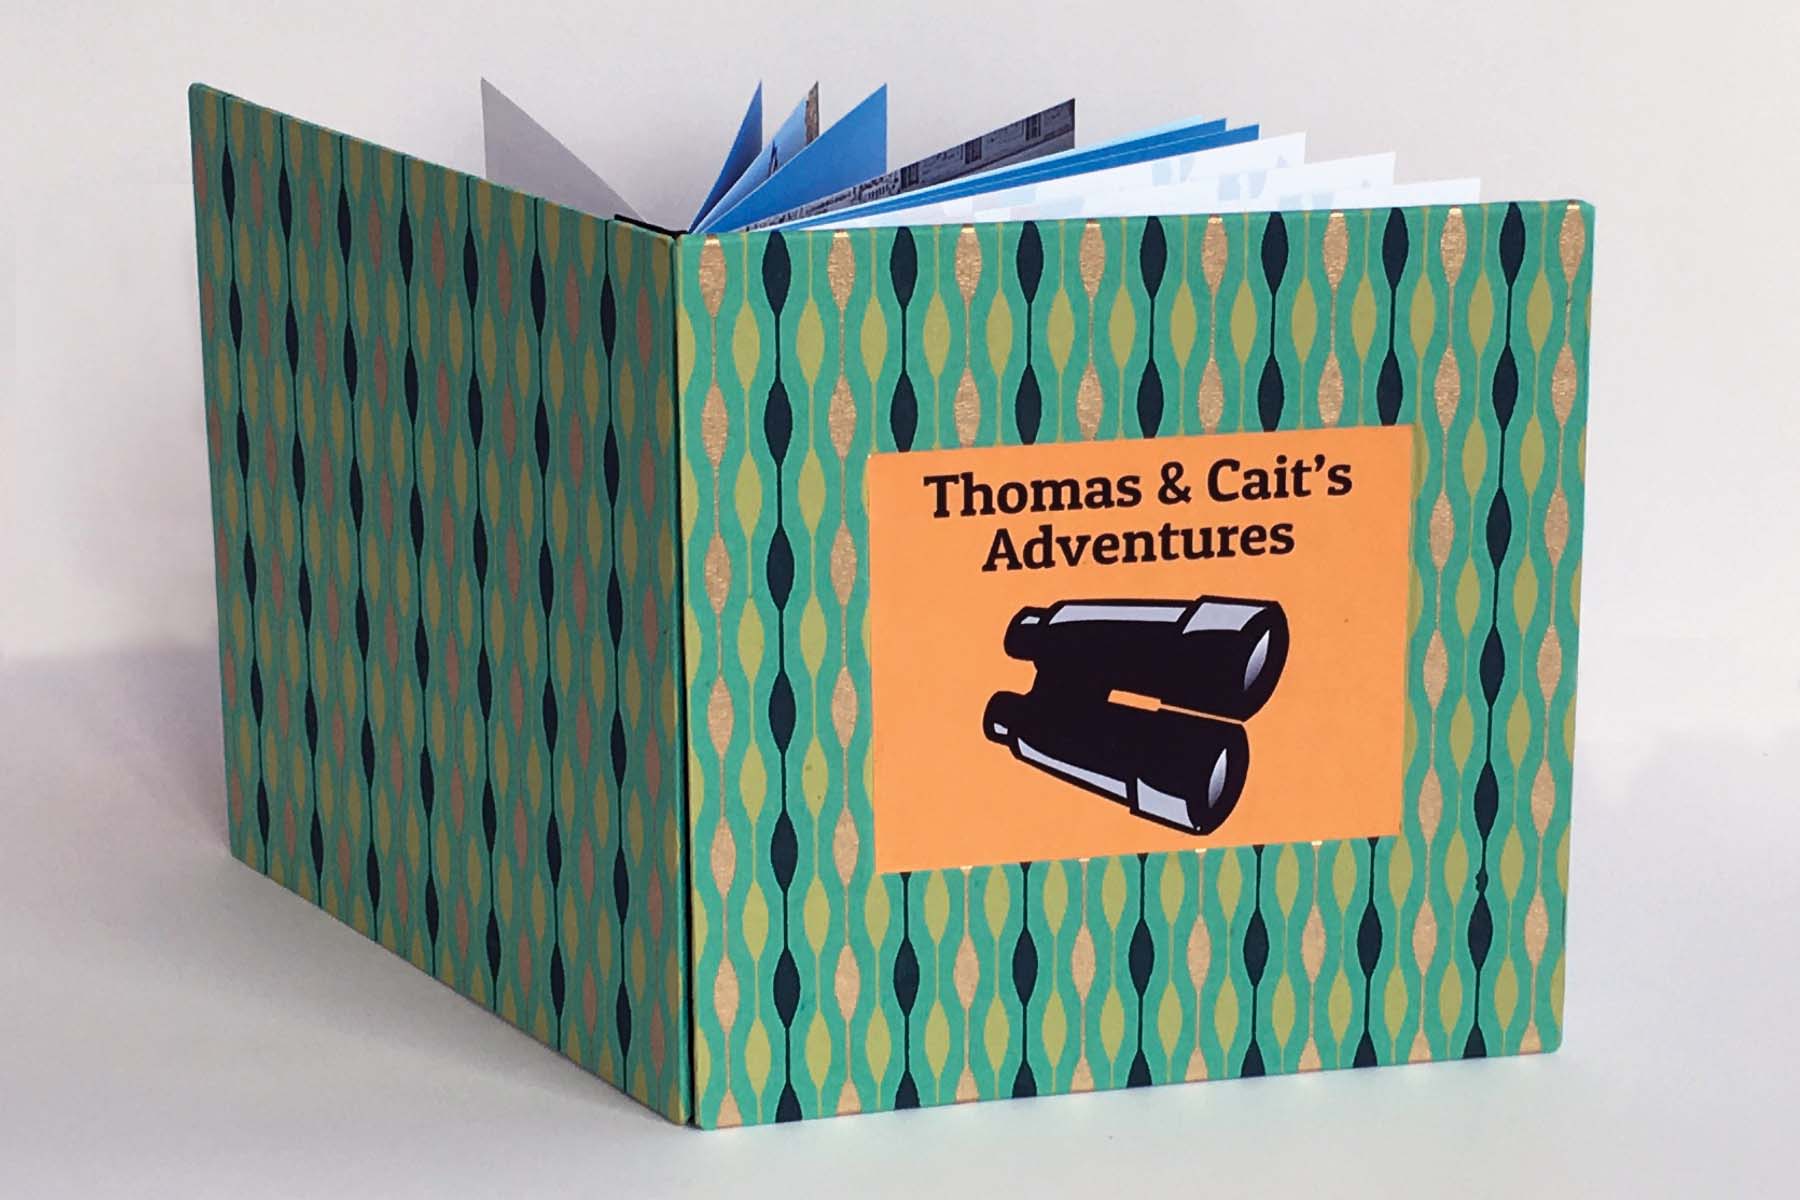 Thomas & Cait's Adventures